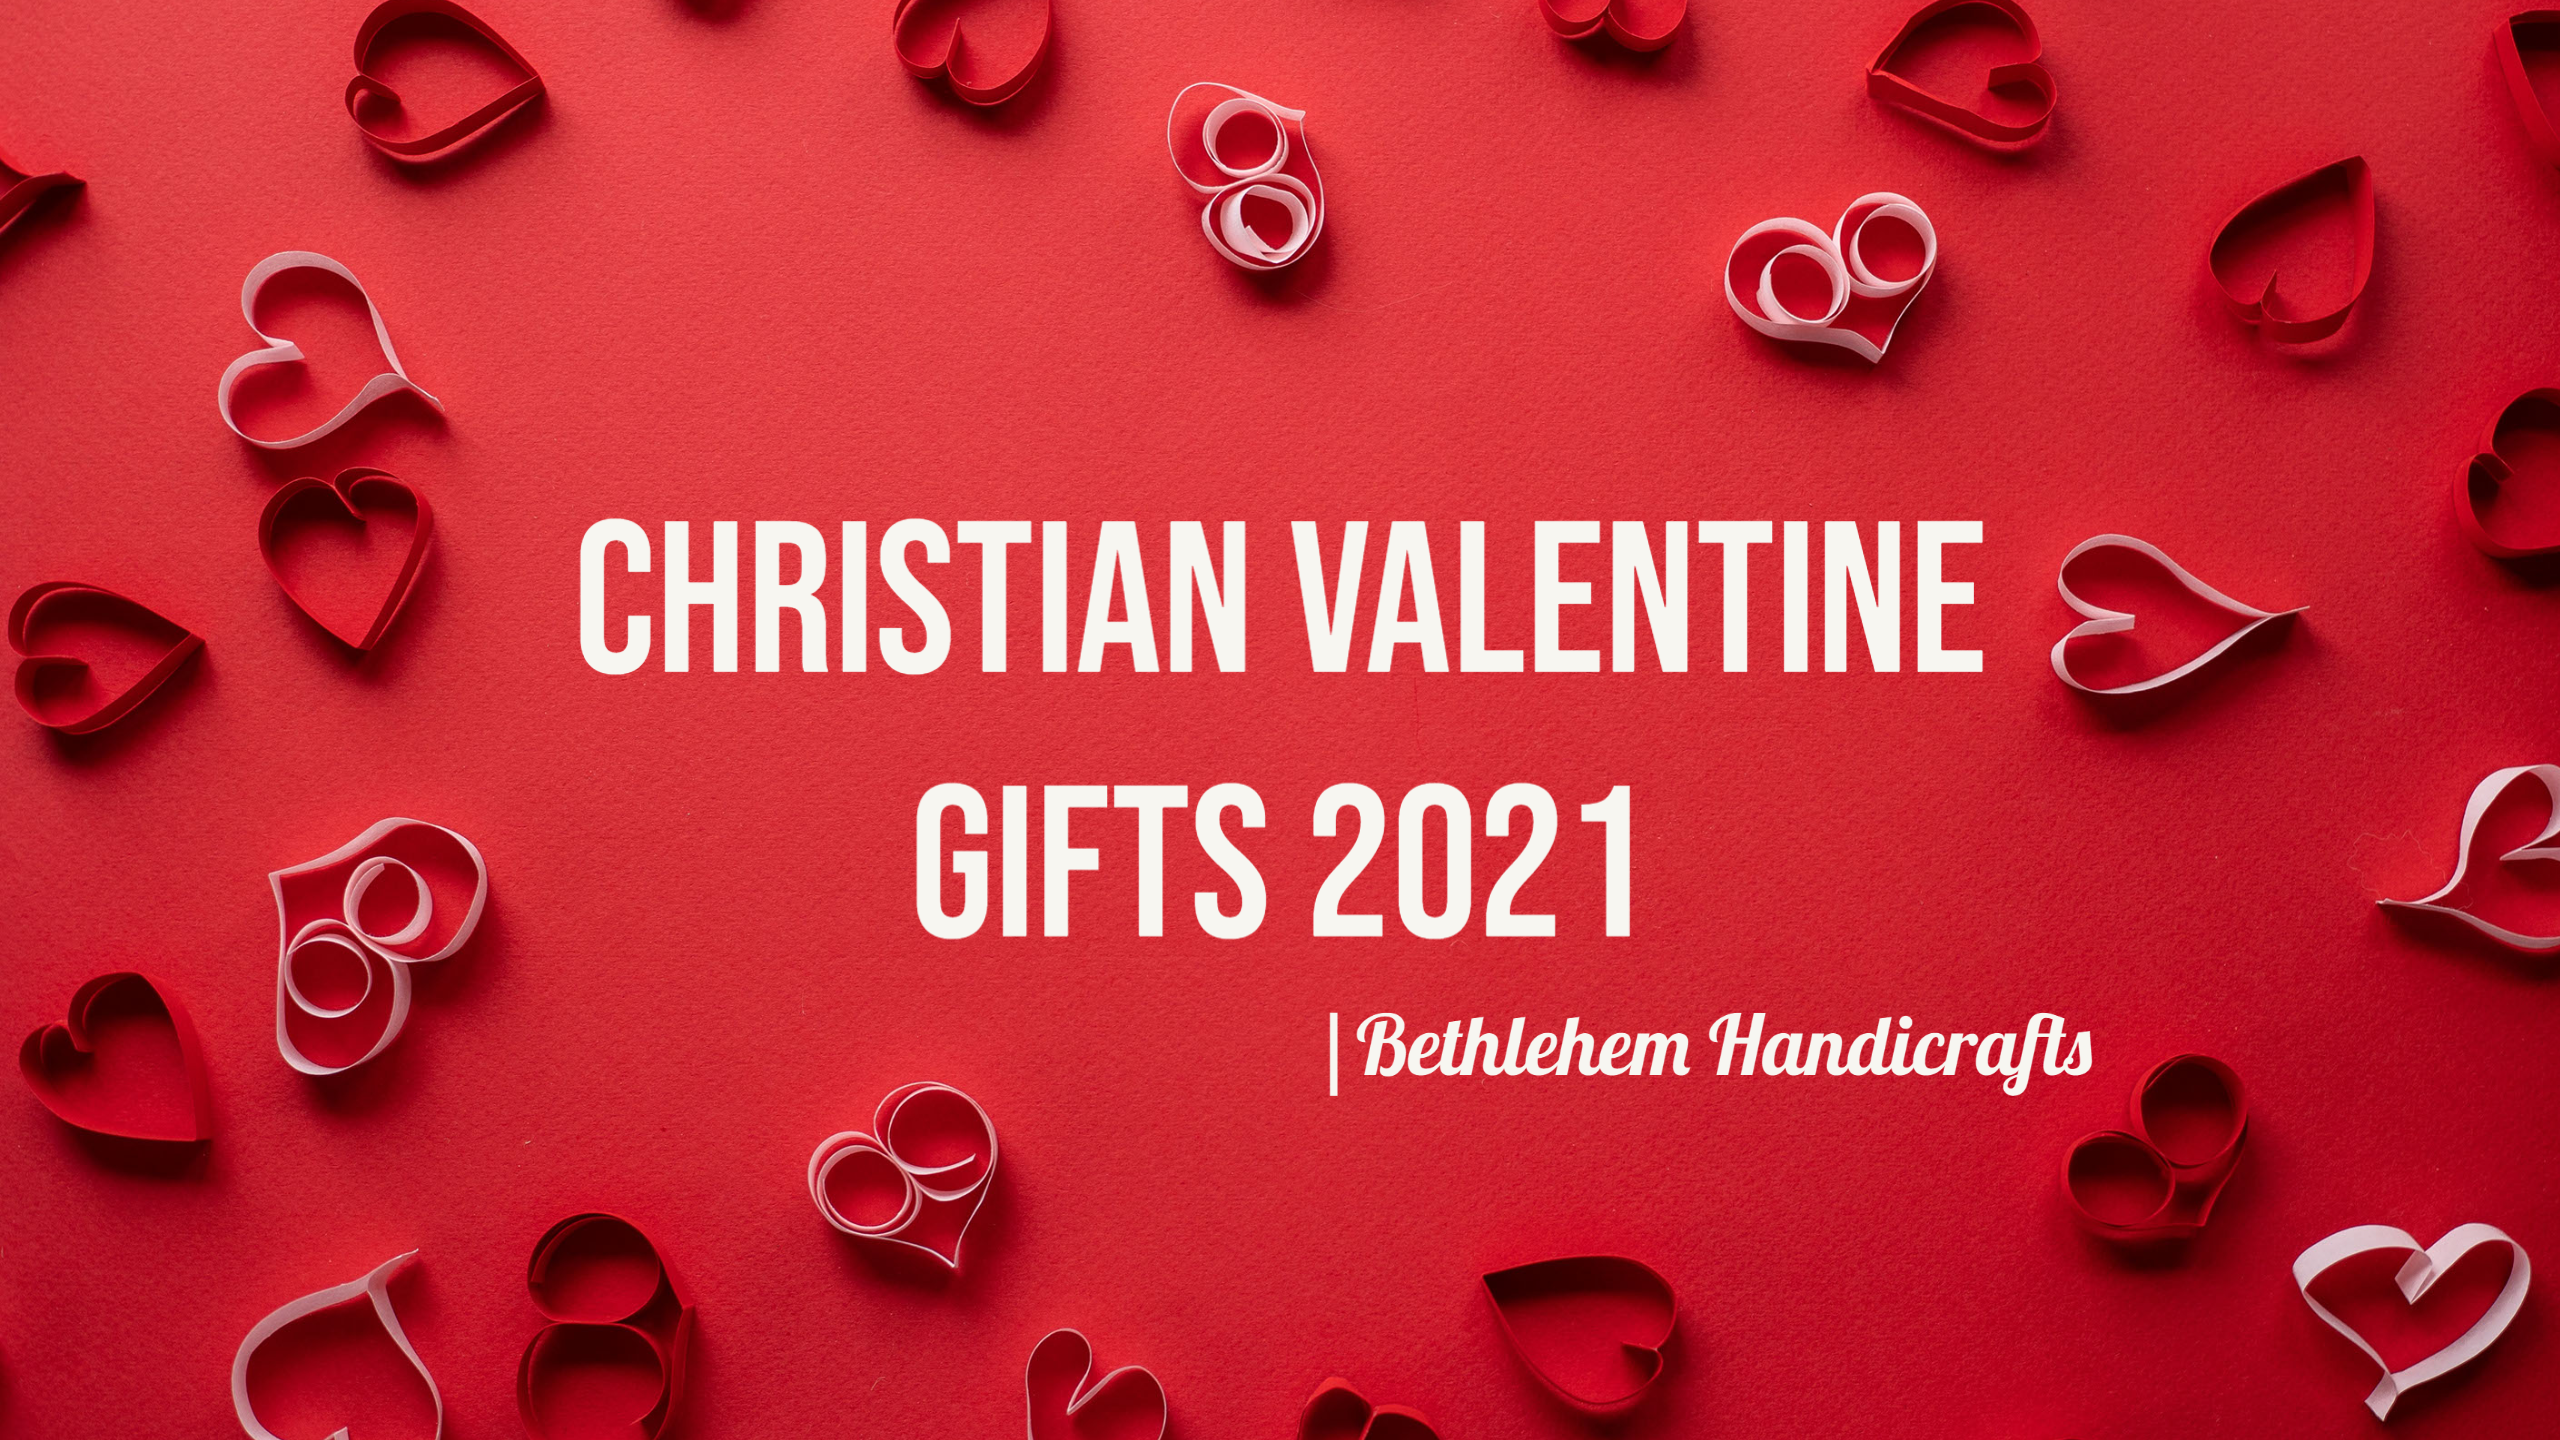 Christian Valentine Gifts 2021 | Bethlehem Handicrafts